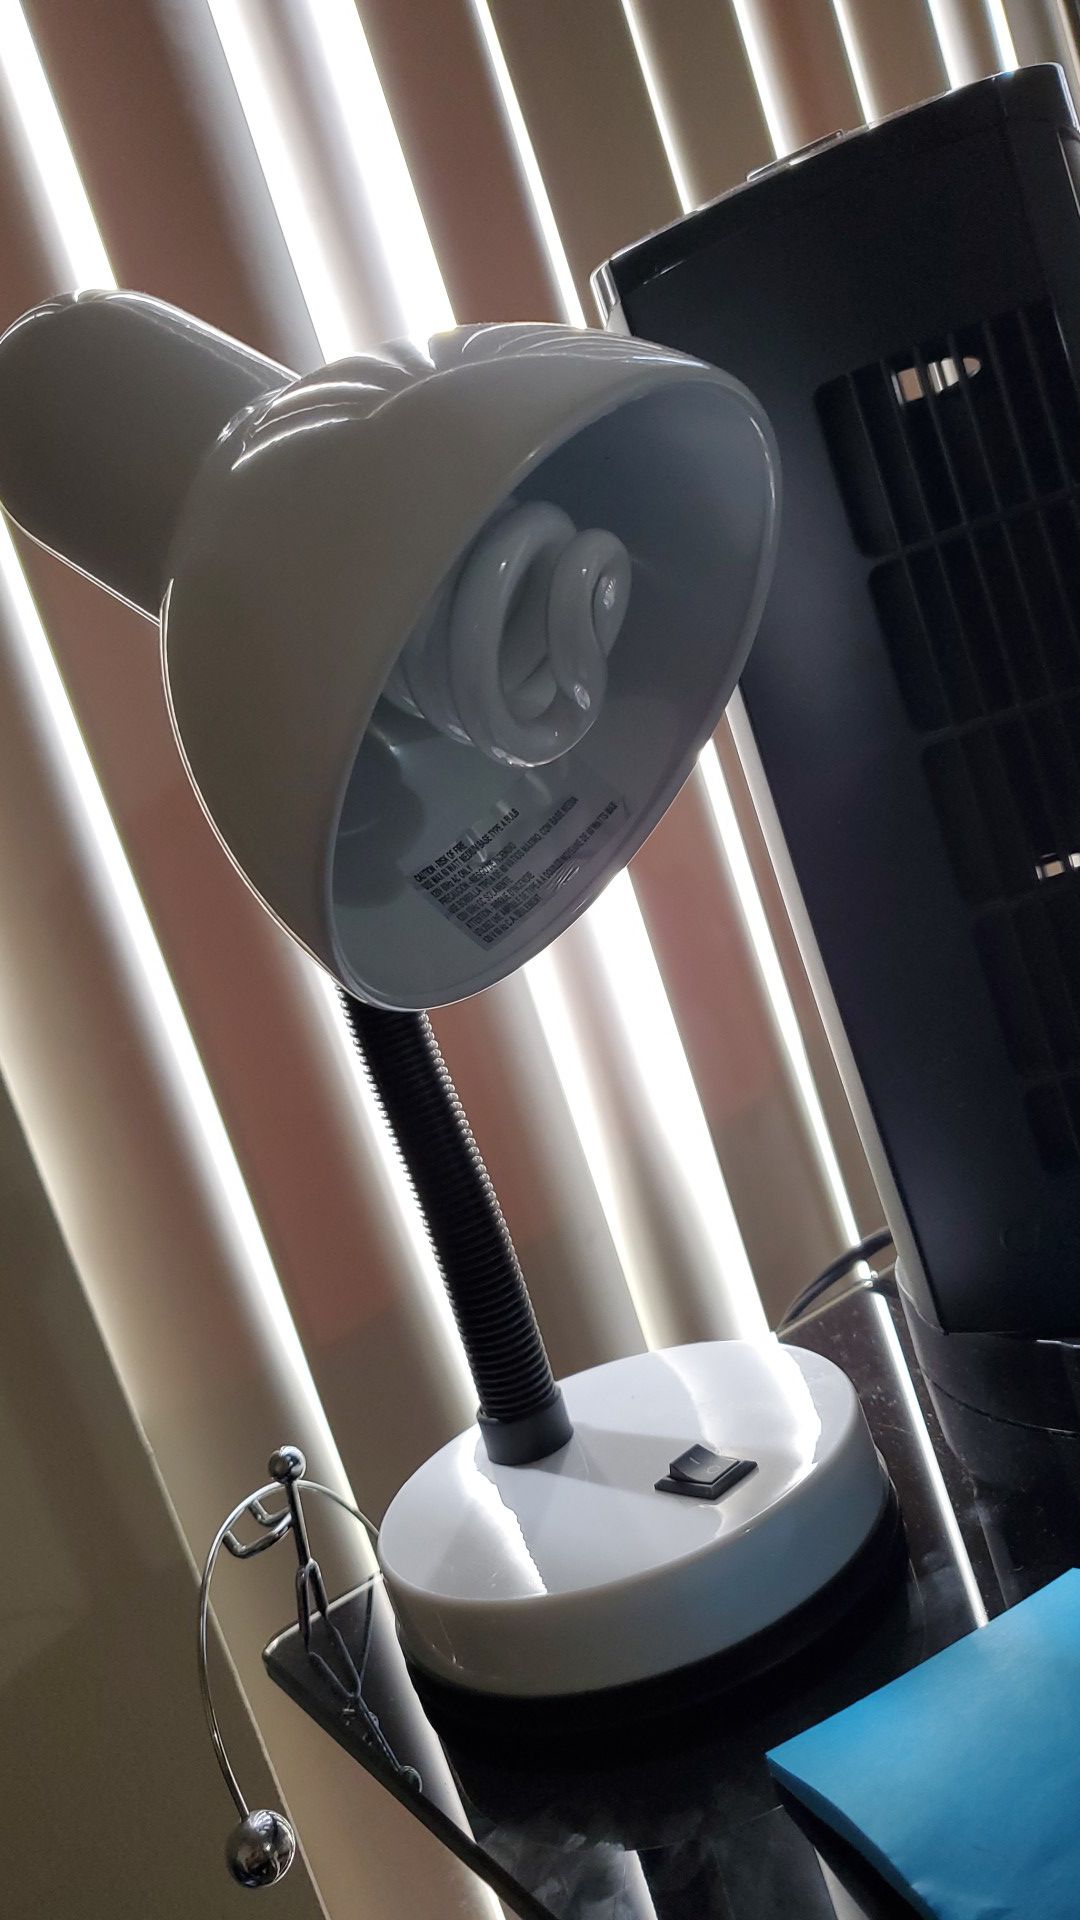 White Metal Desk Lamp